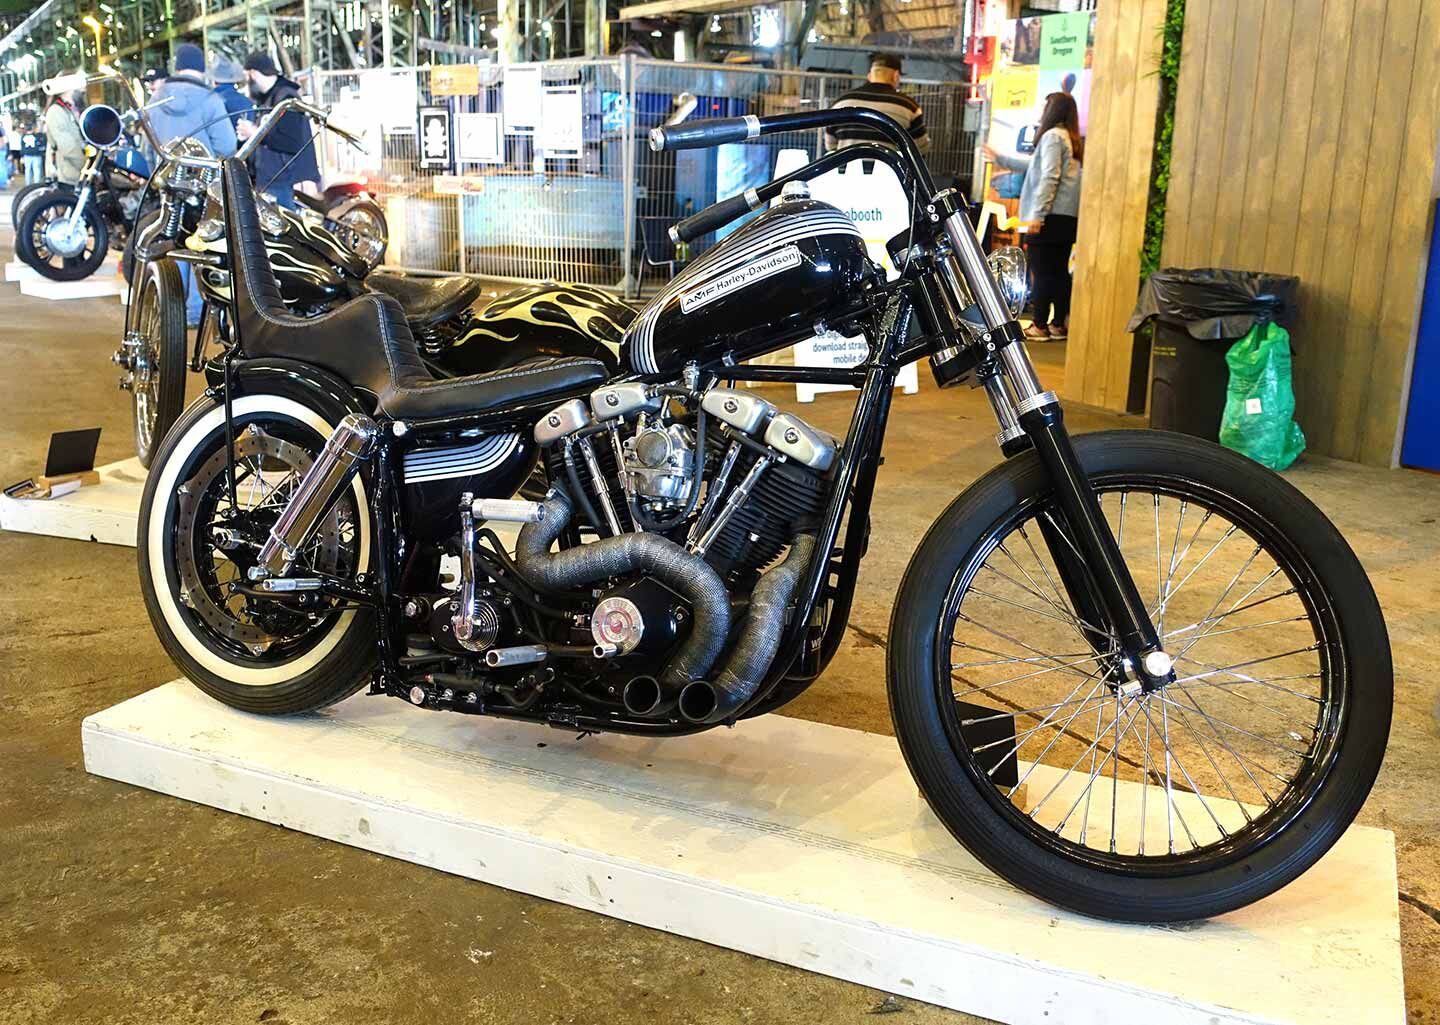 Just a super-clean AMF-era Harley-Davidson.